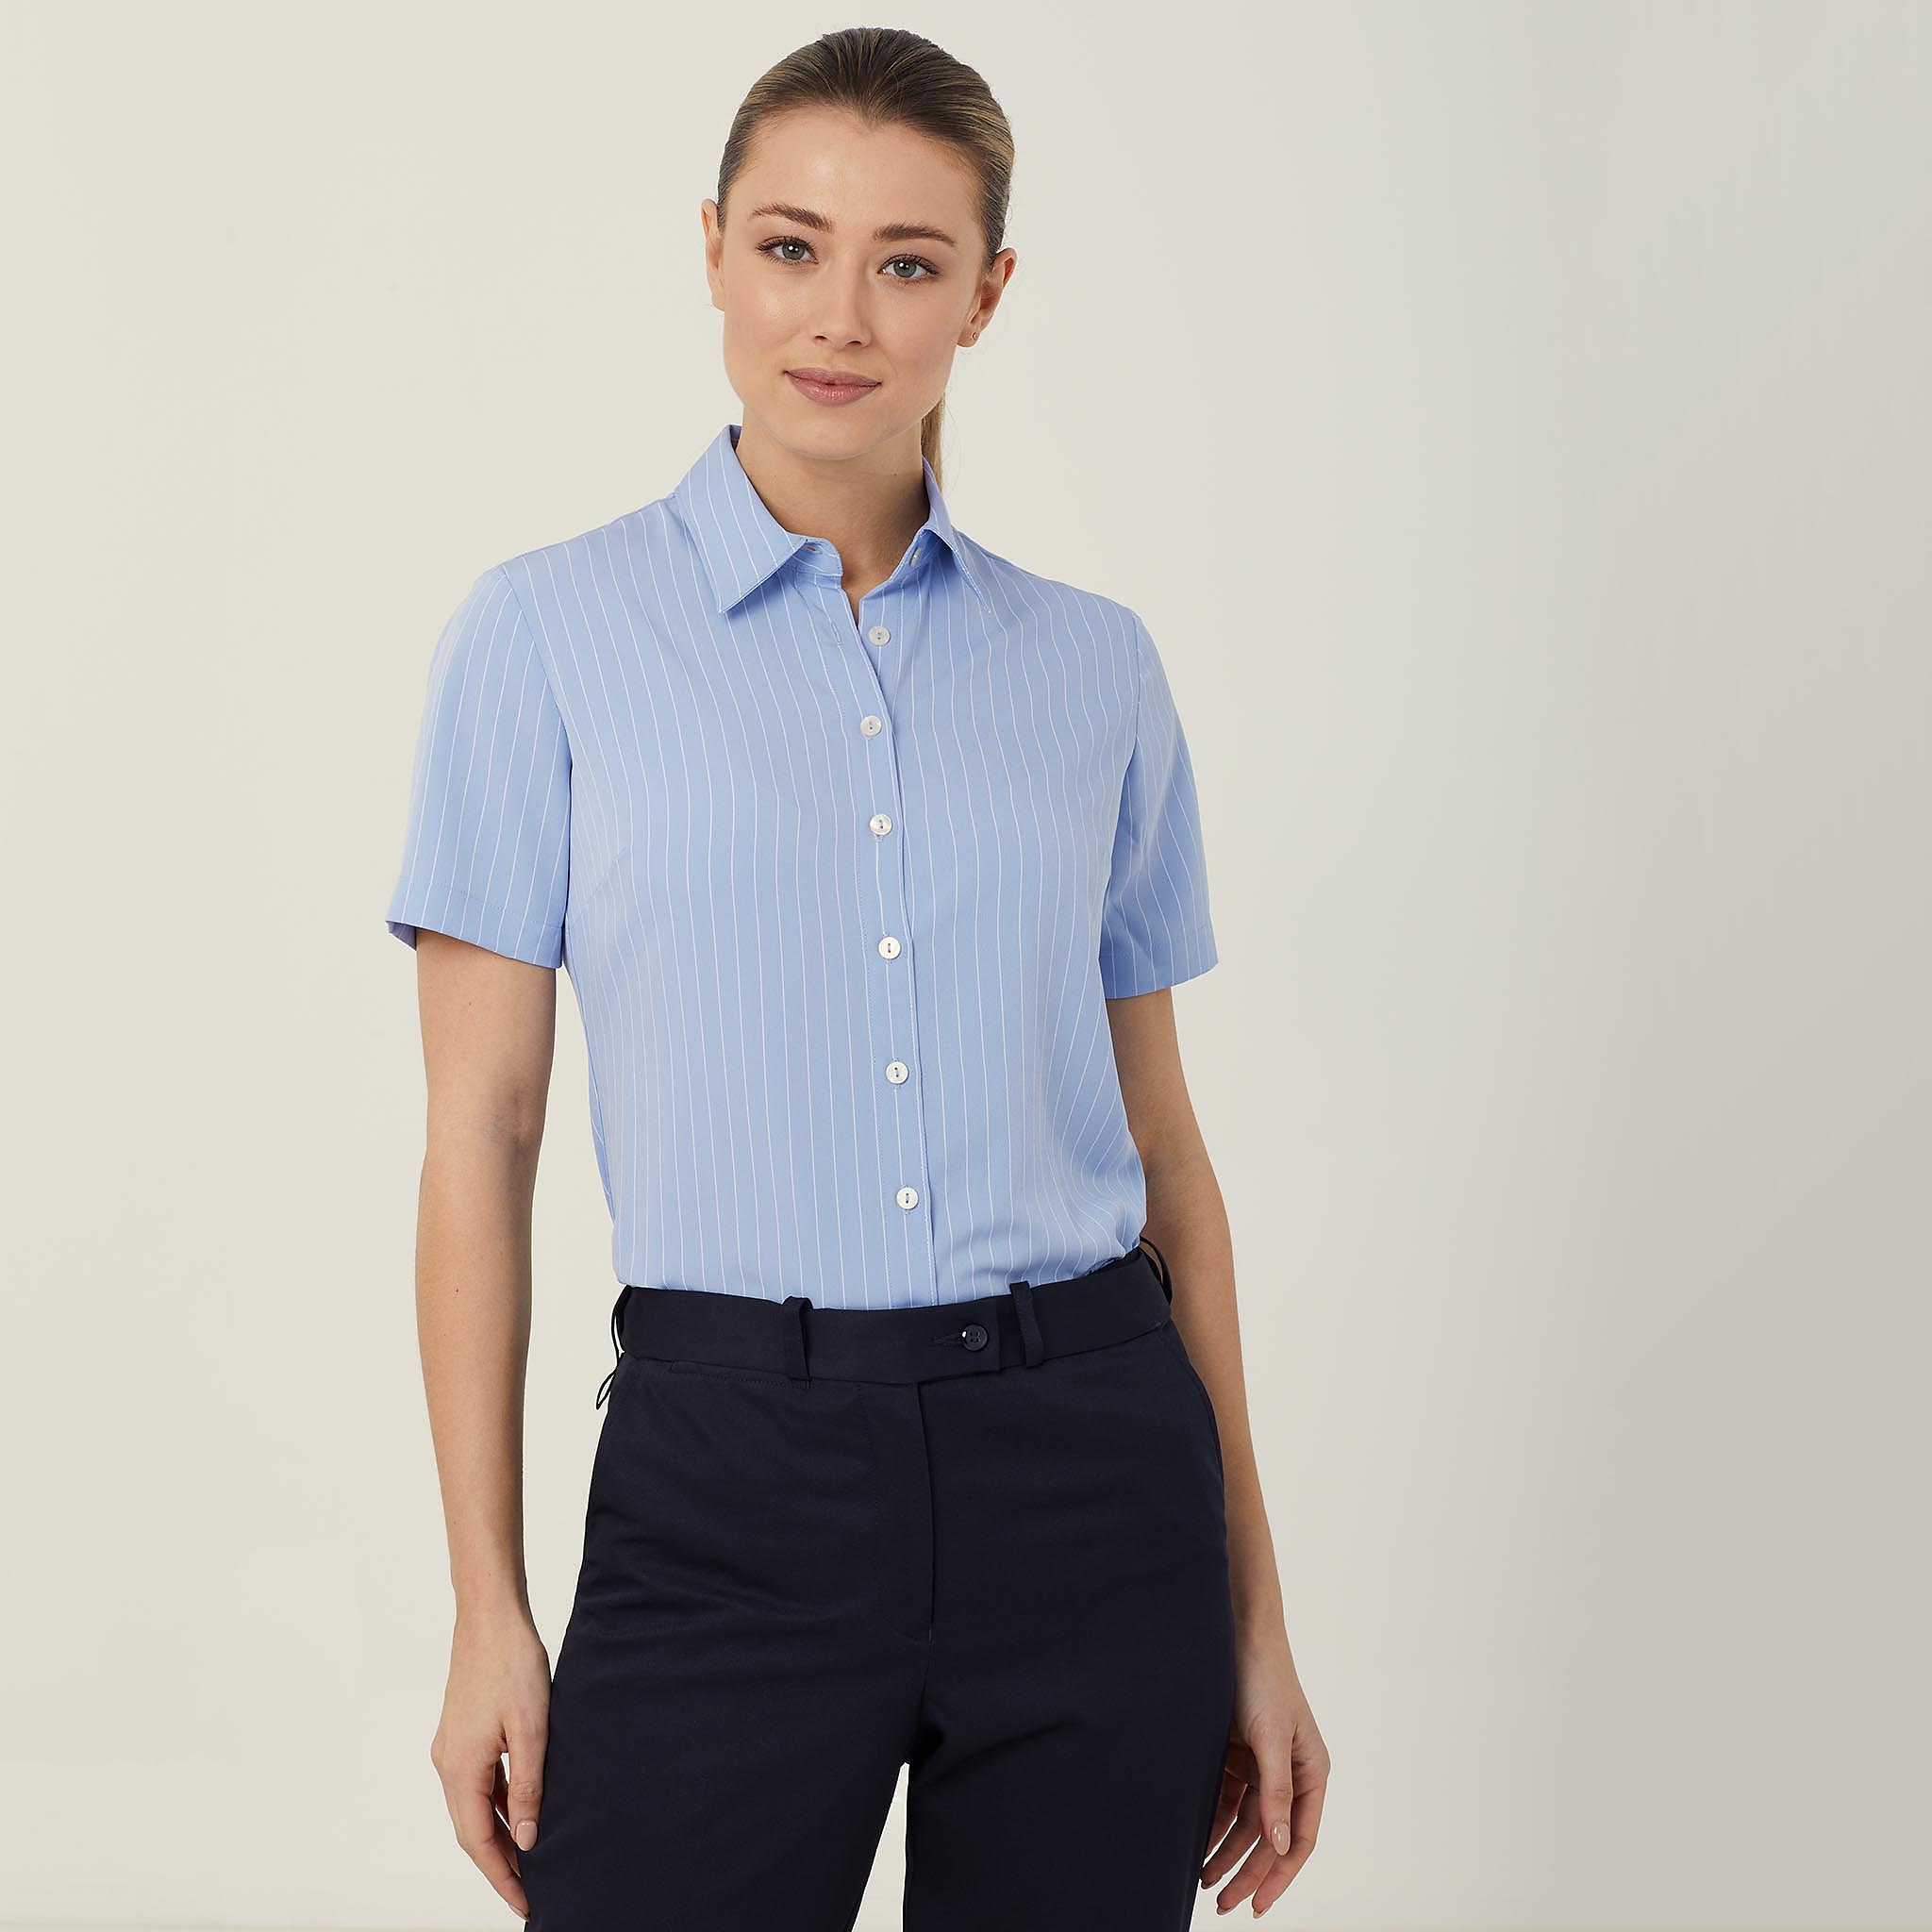 Poly Print Short Sleeve Action Back Shirt, blue | NNT Uniforms